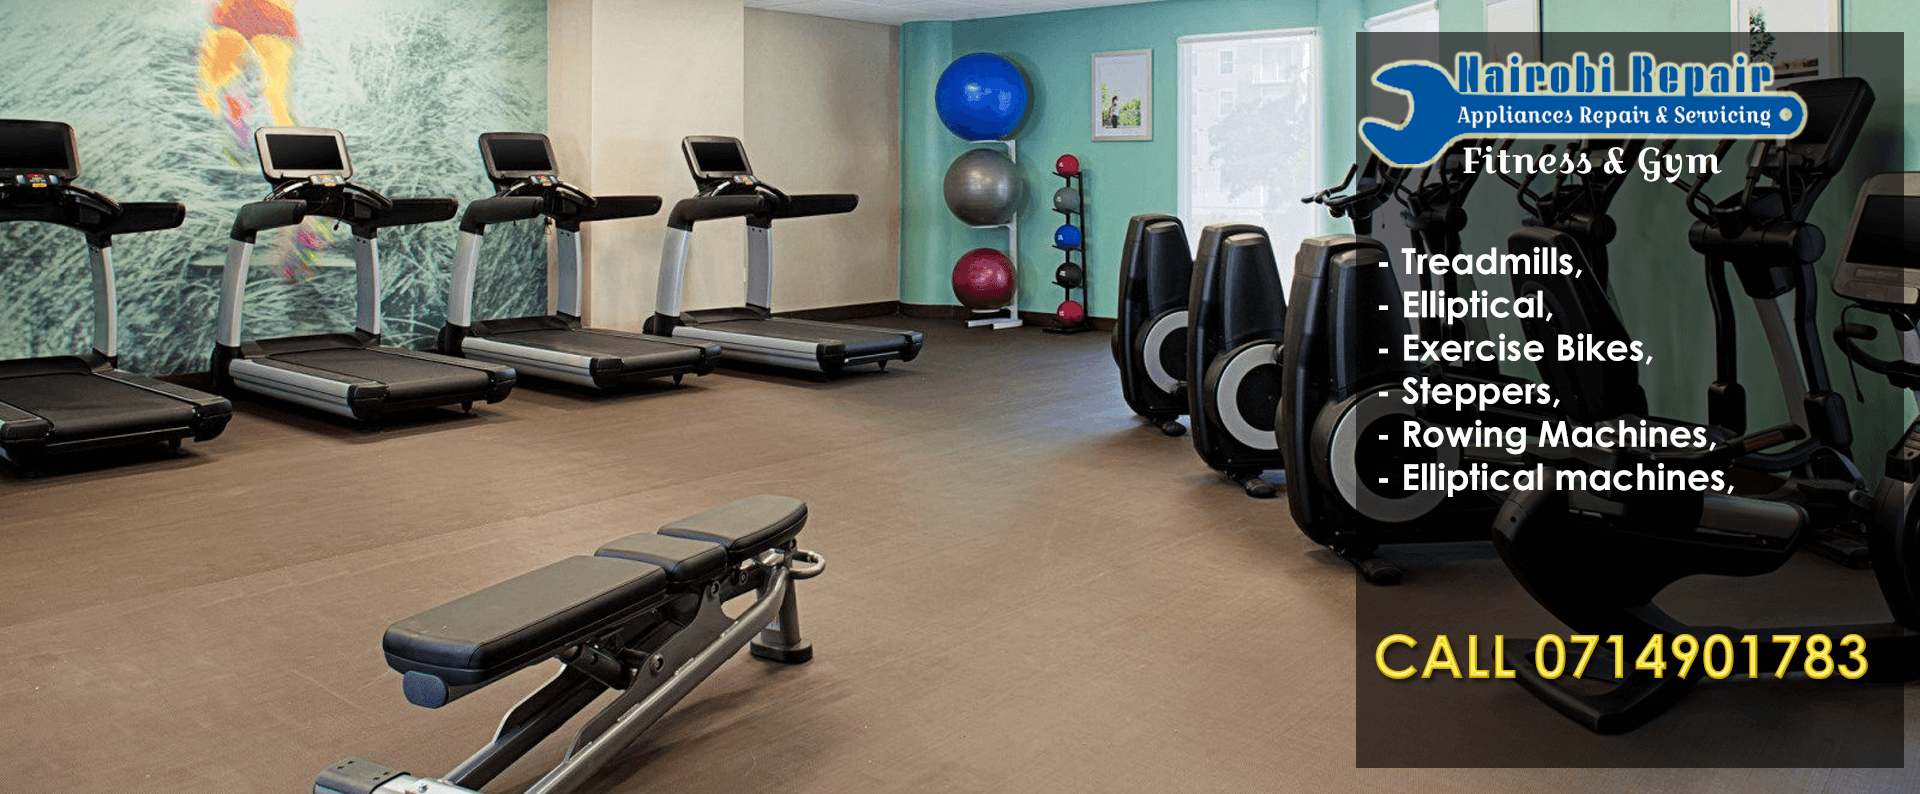 Treadmill repair fitness